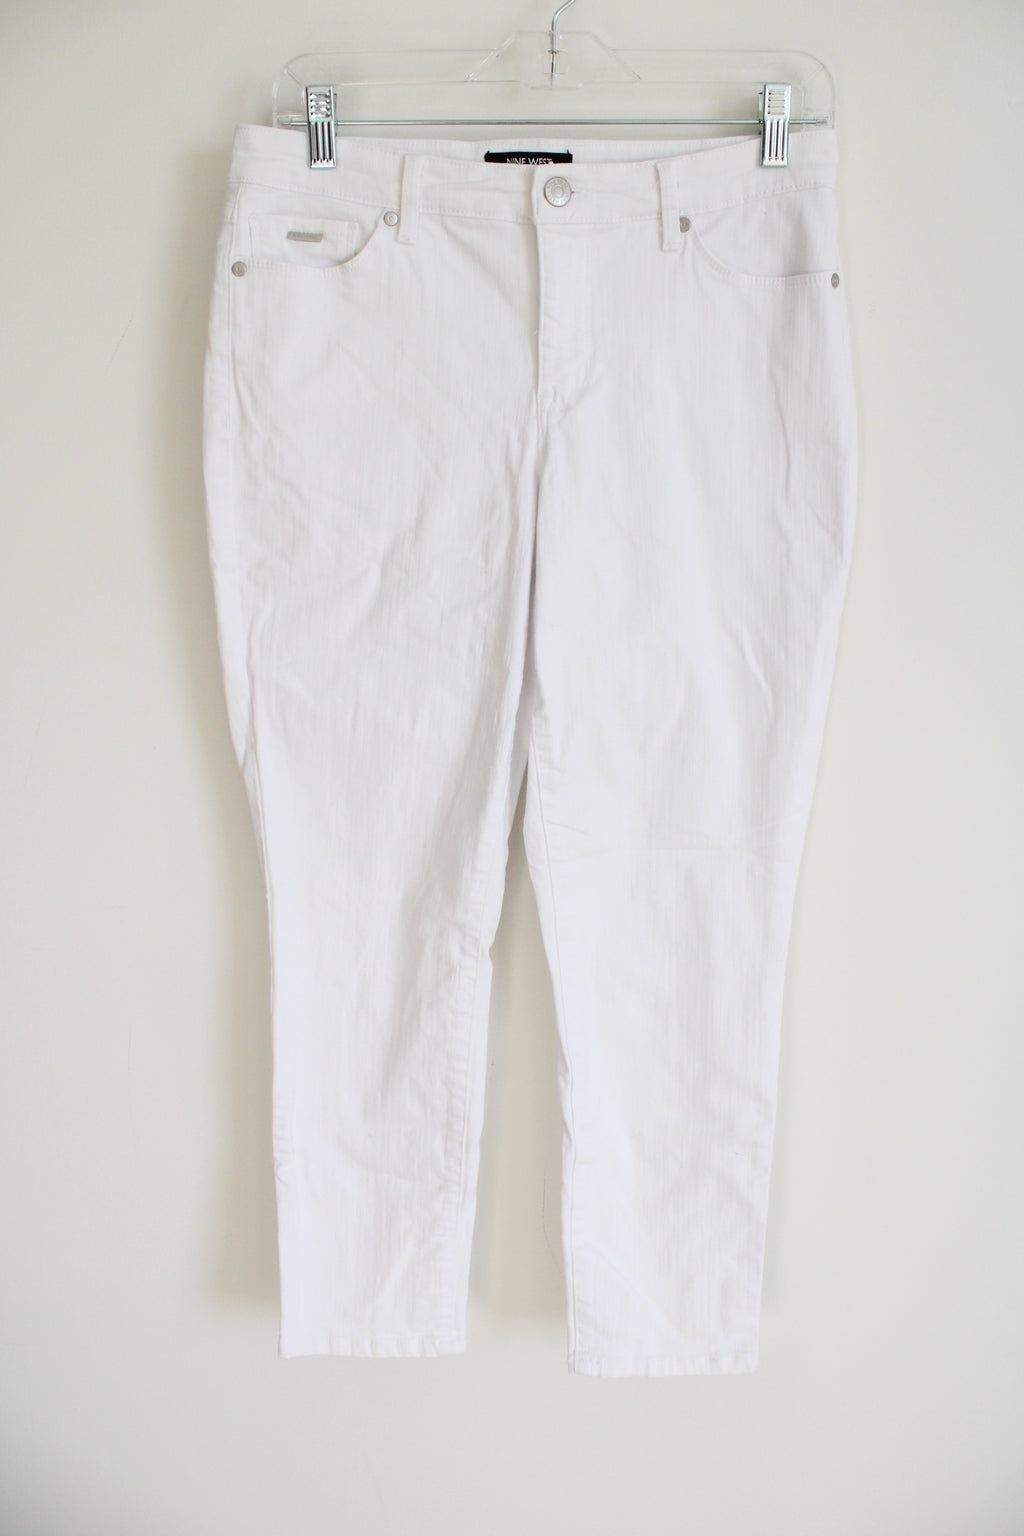 Nine West Gramercy Skinny Crop White Jeans | 6